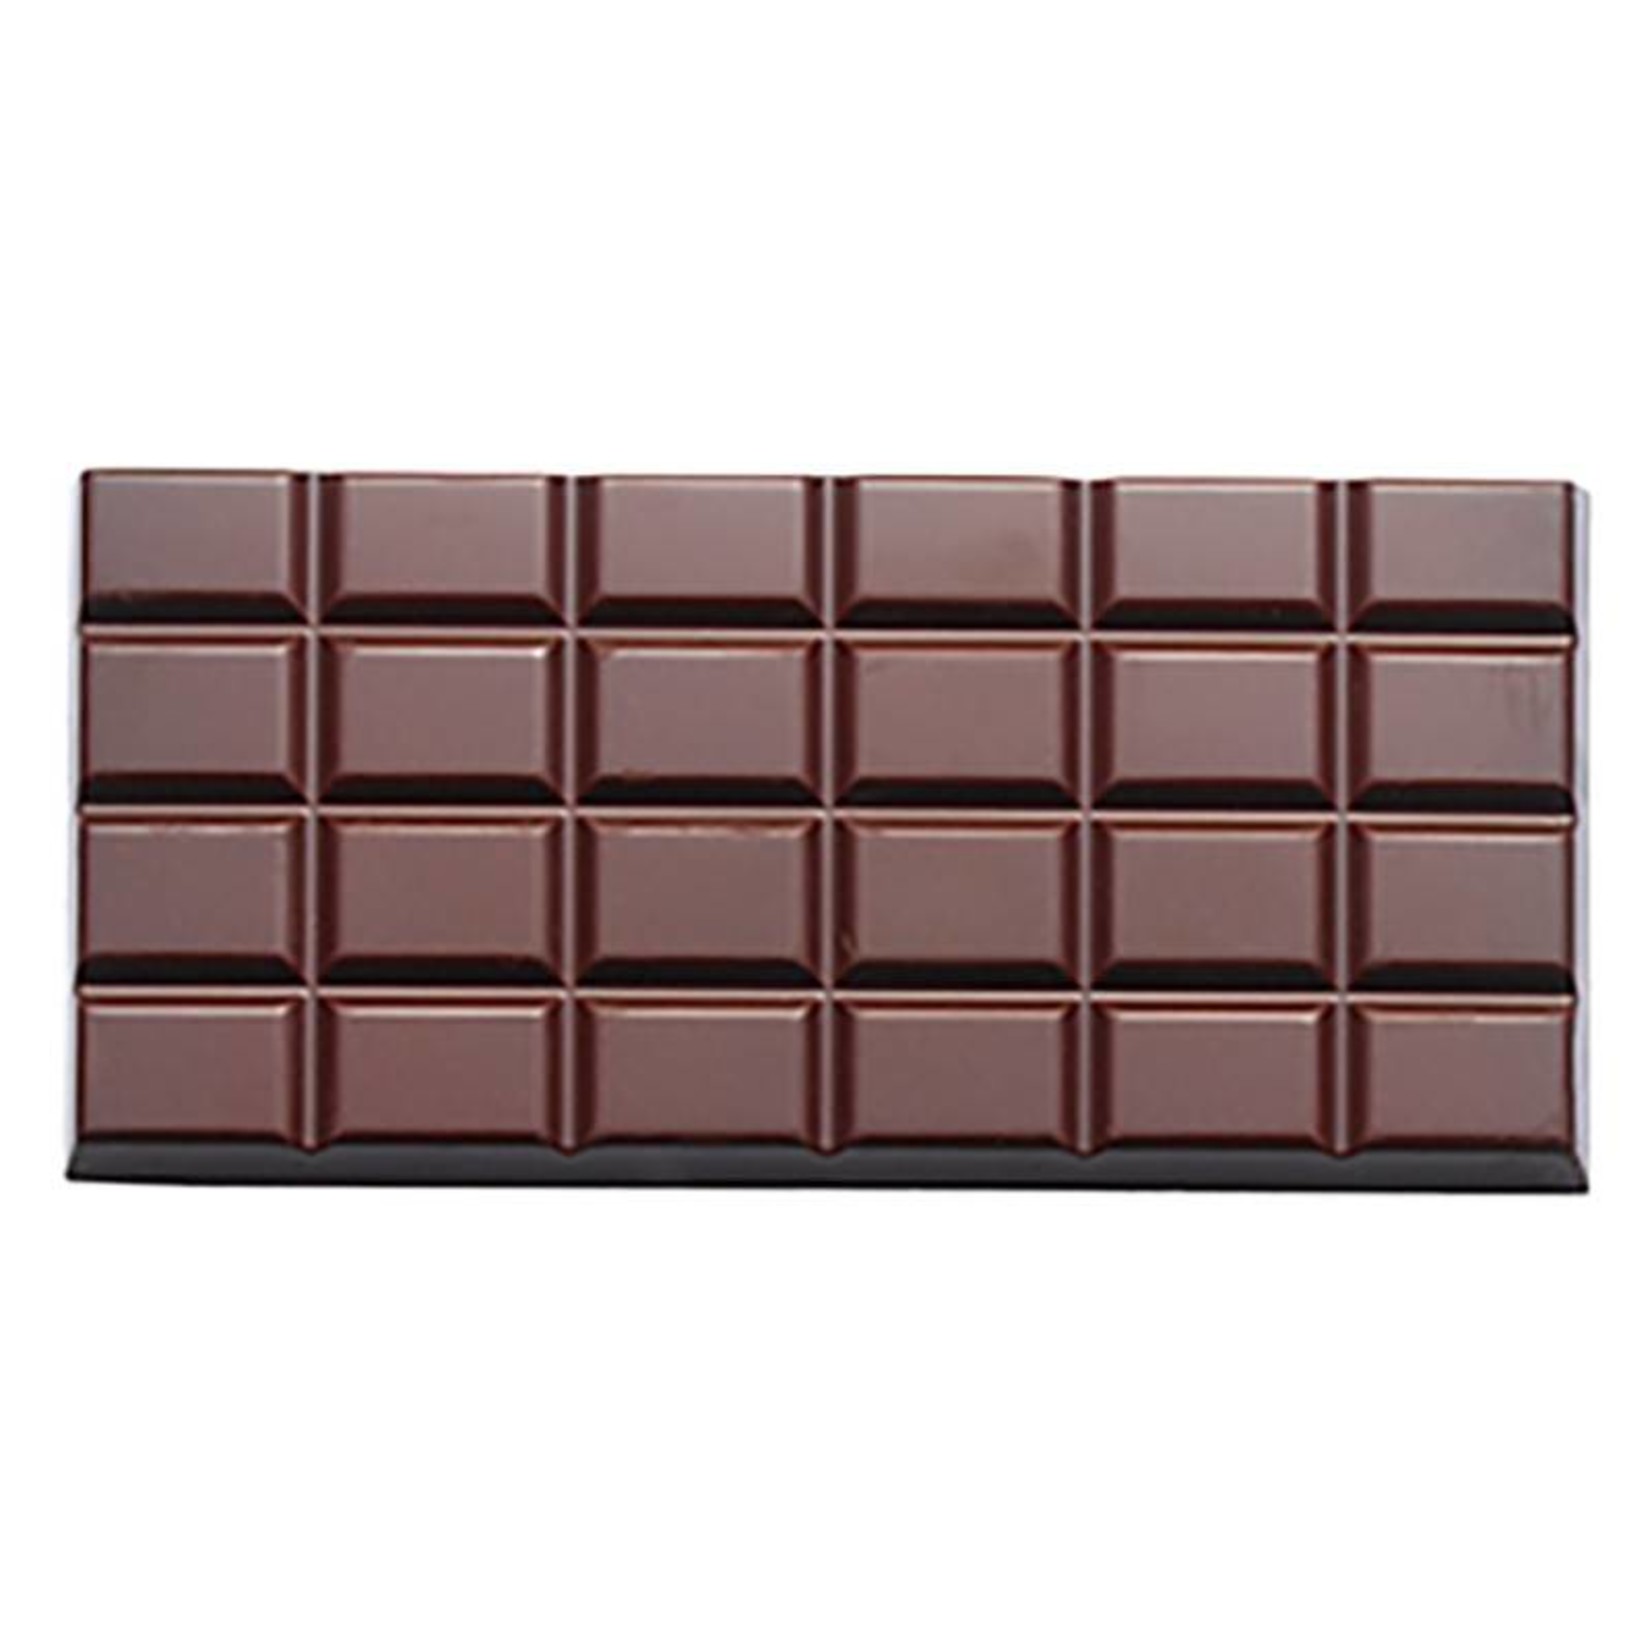 Cacao Barry Cacao Barry - 100 g Bar Tritan Chocolate Mold (3 cavity)